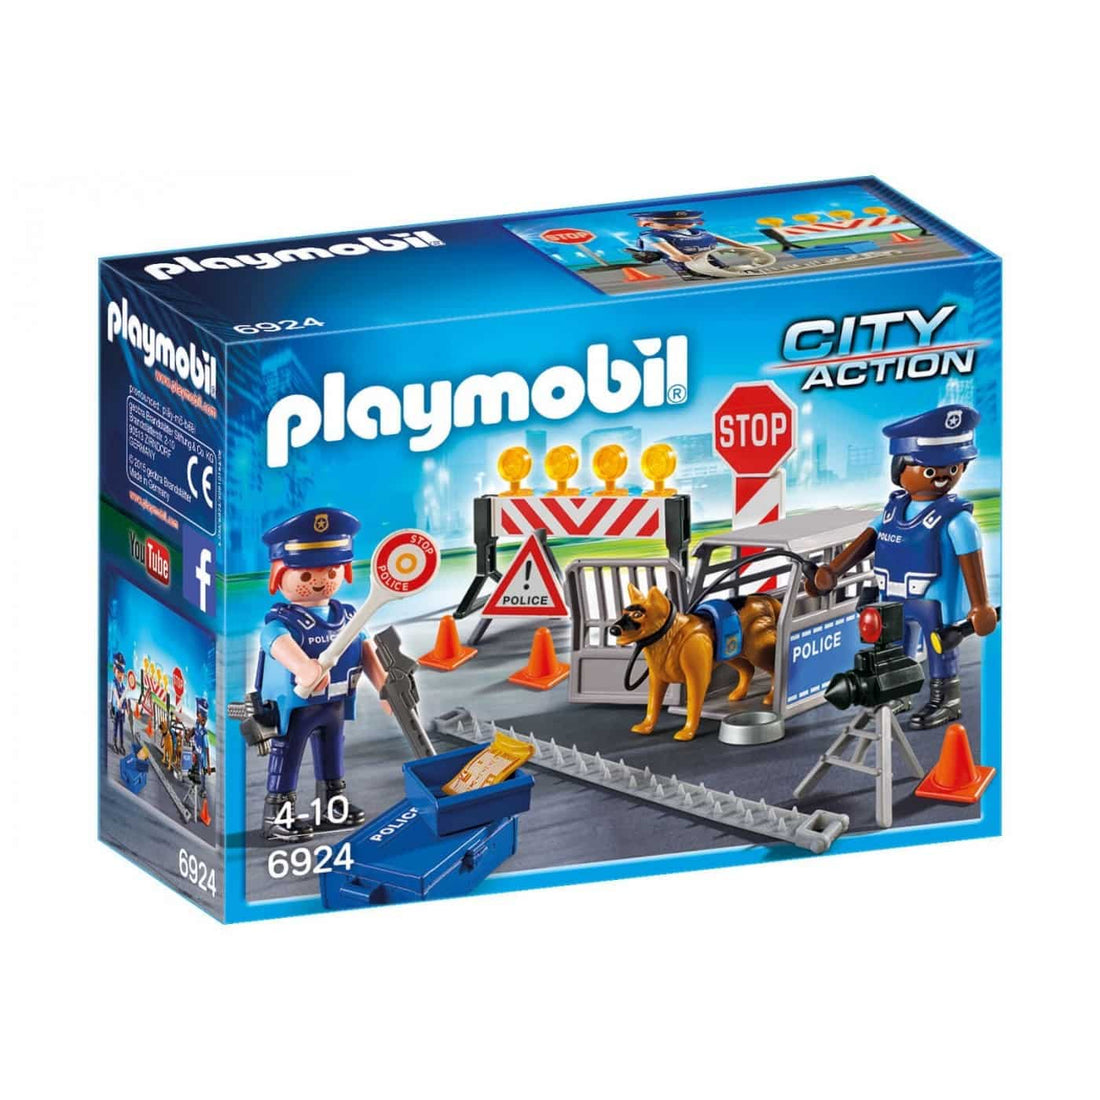 6924 Playmobil City Action Οδοφραγμα Αστυνομιας